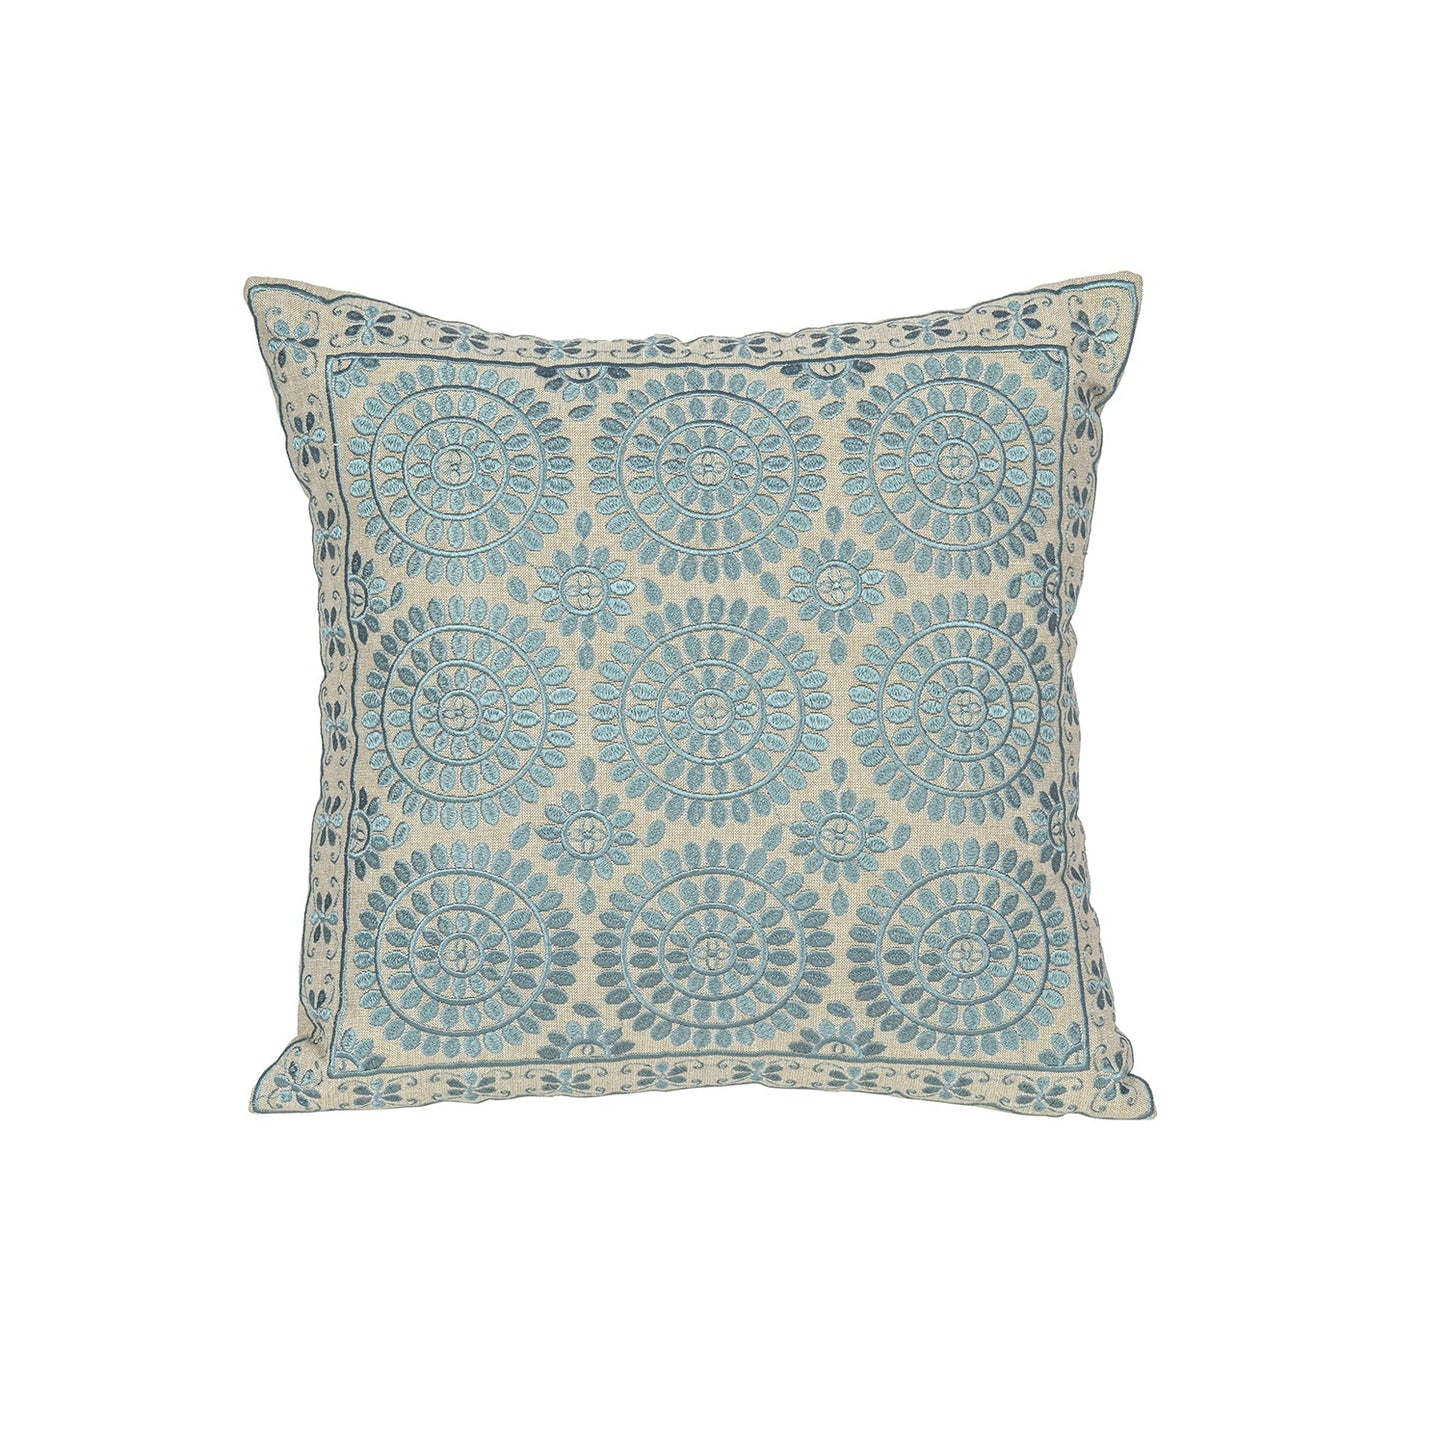 Gray Geometric Jaipur Throw Pillow Cover - I